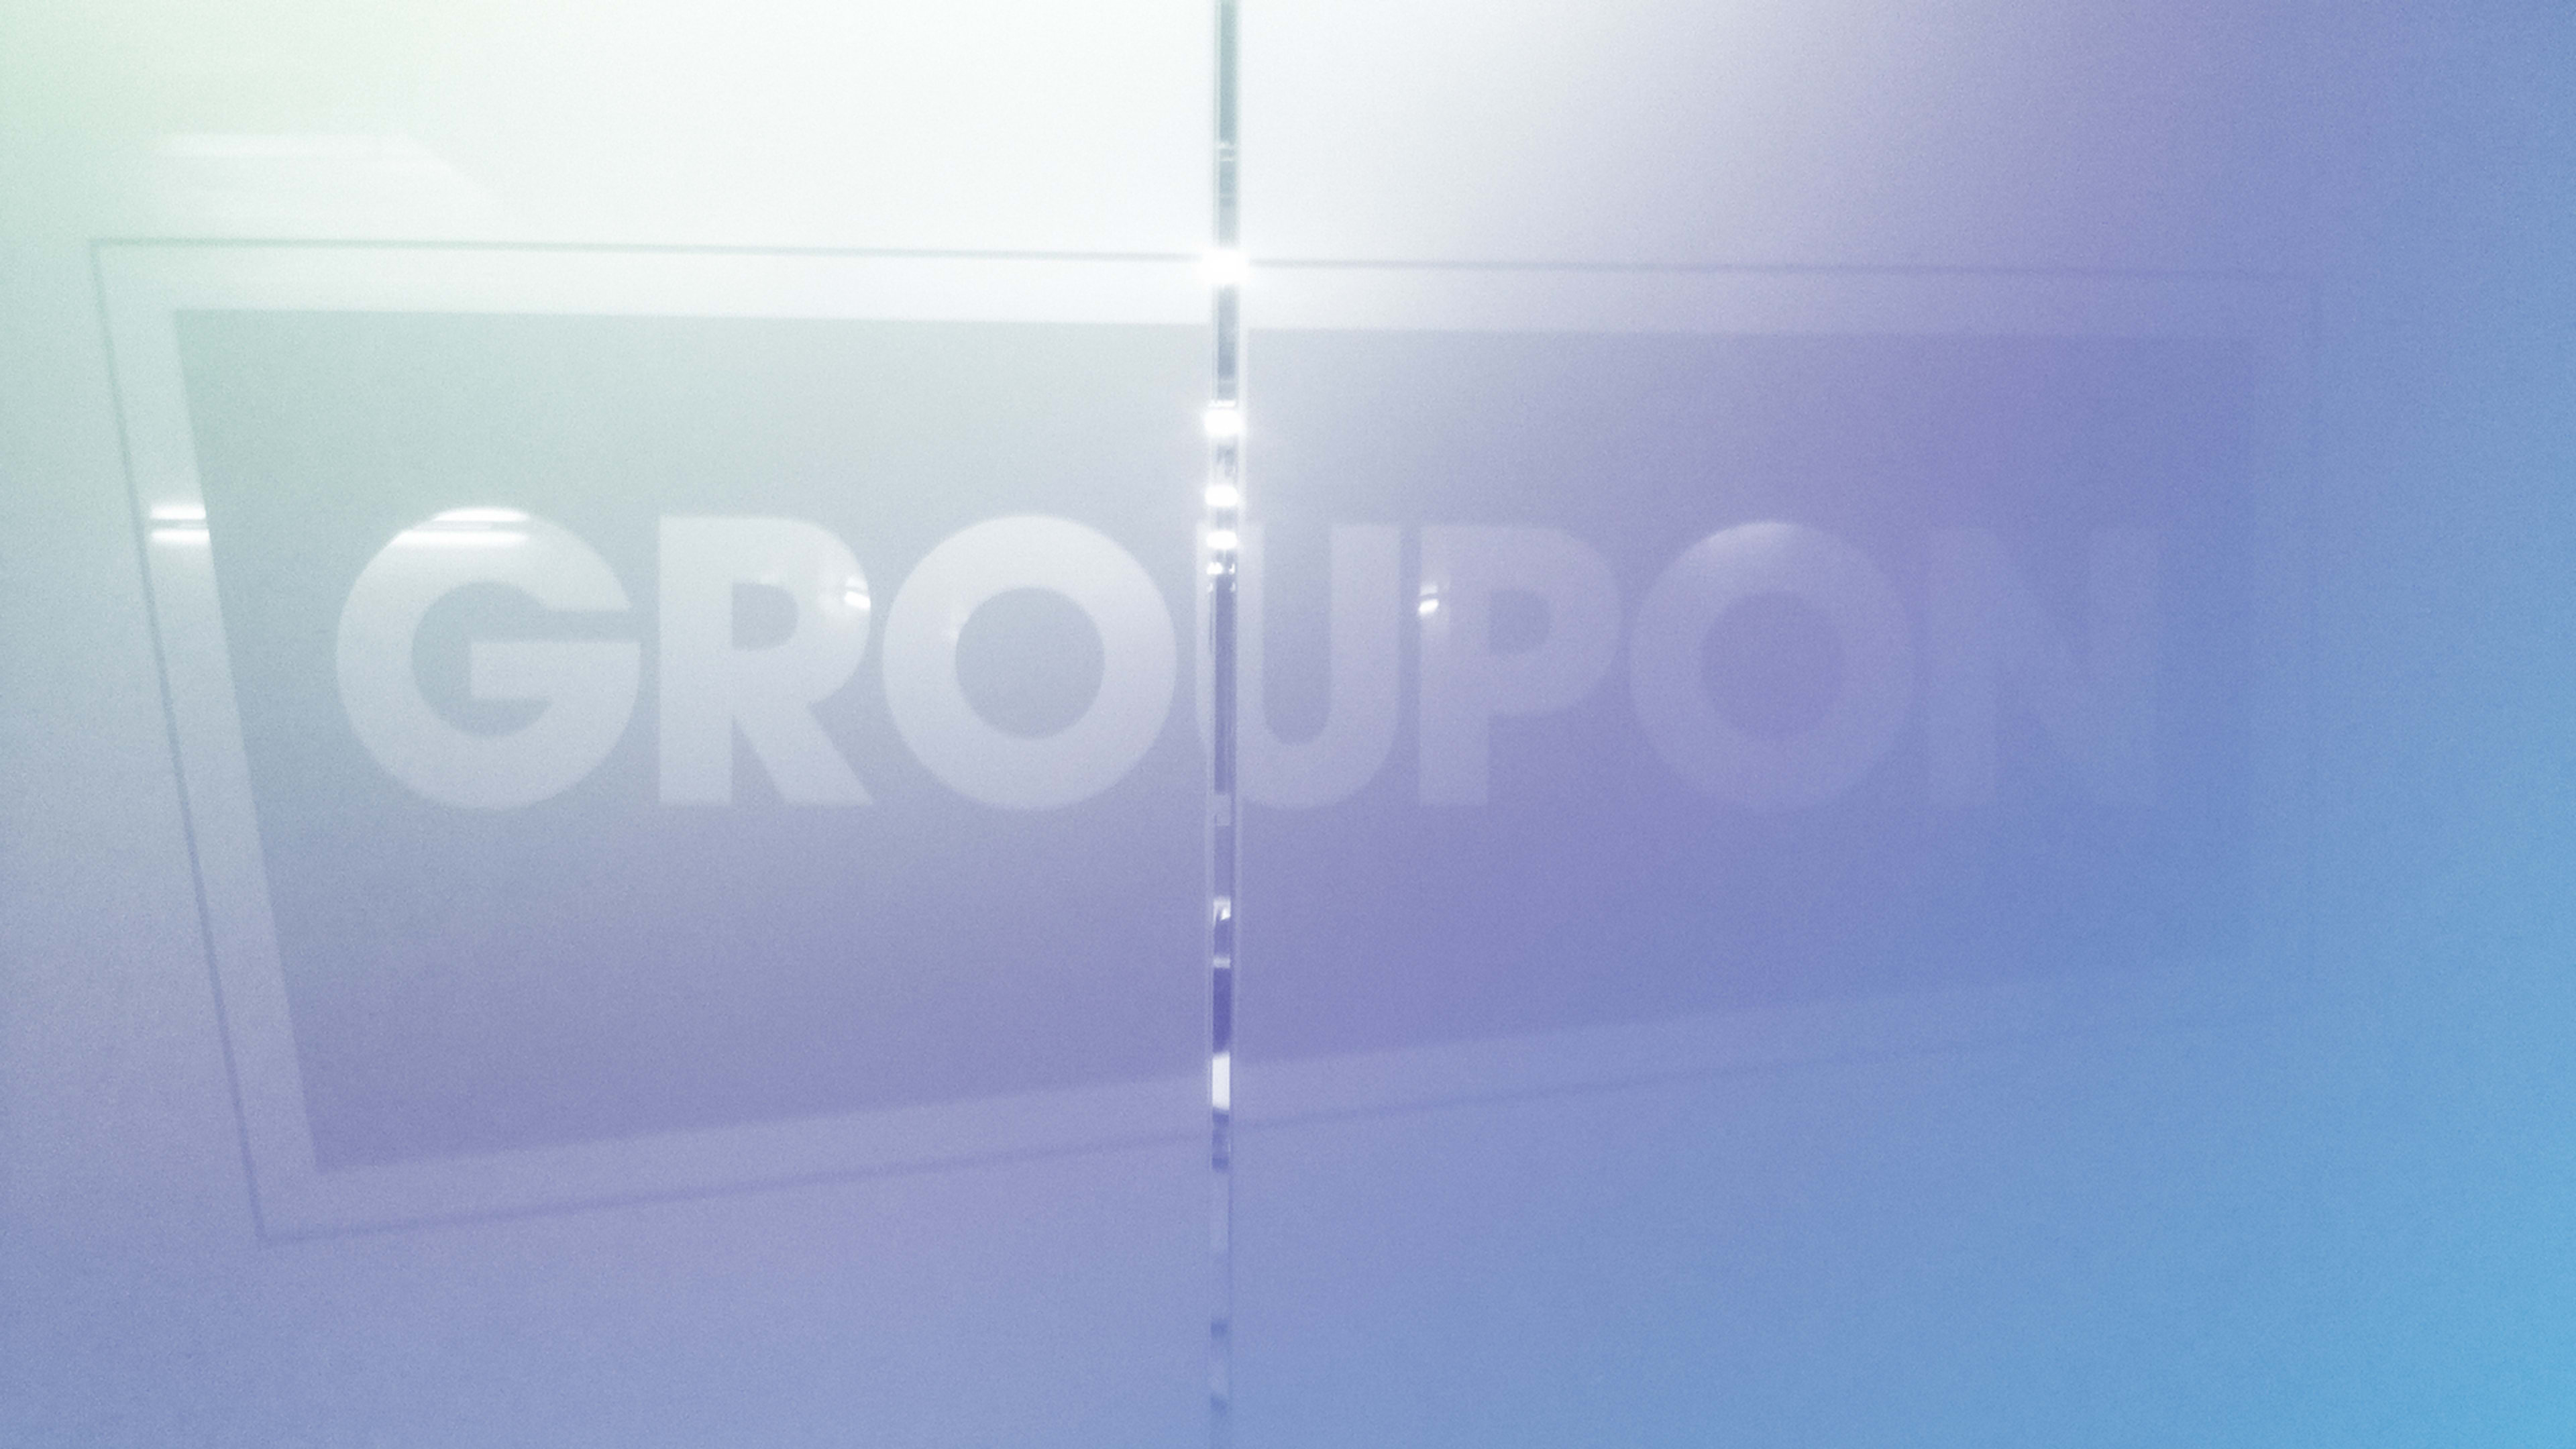 Groupon loses $83 million patent dispute with IBM